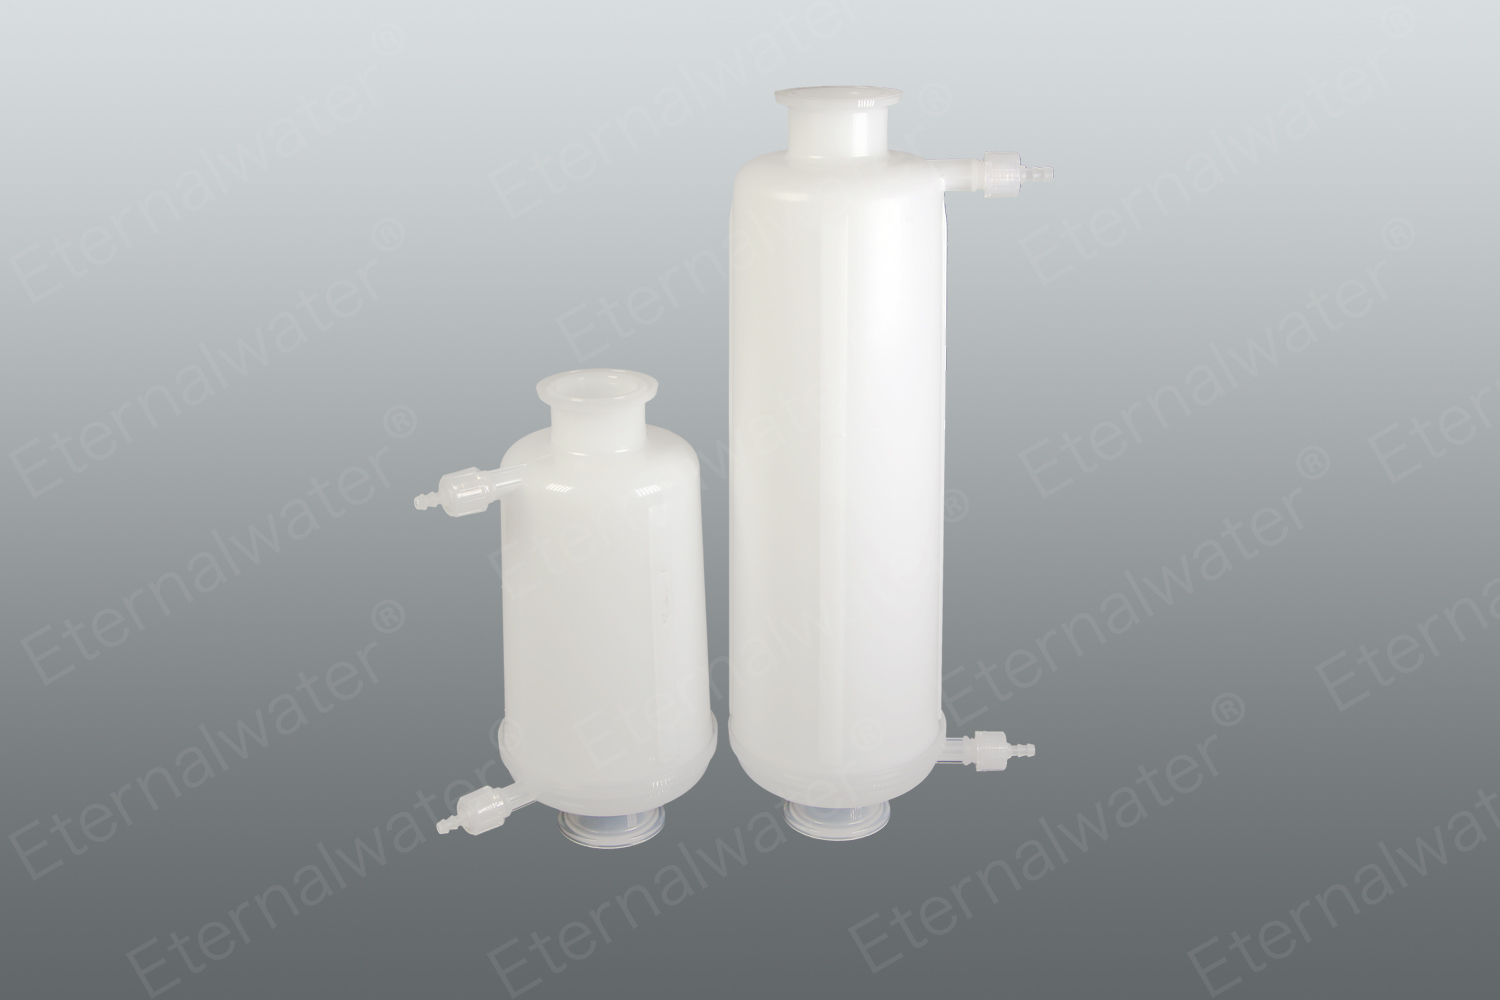 ecs-b series of gamma-resistant hydrophilic capsule filter